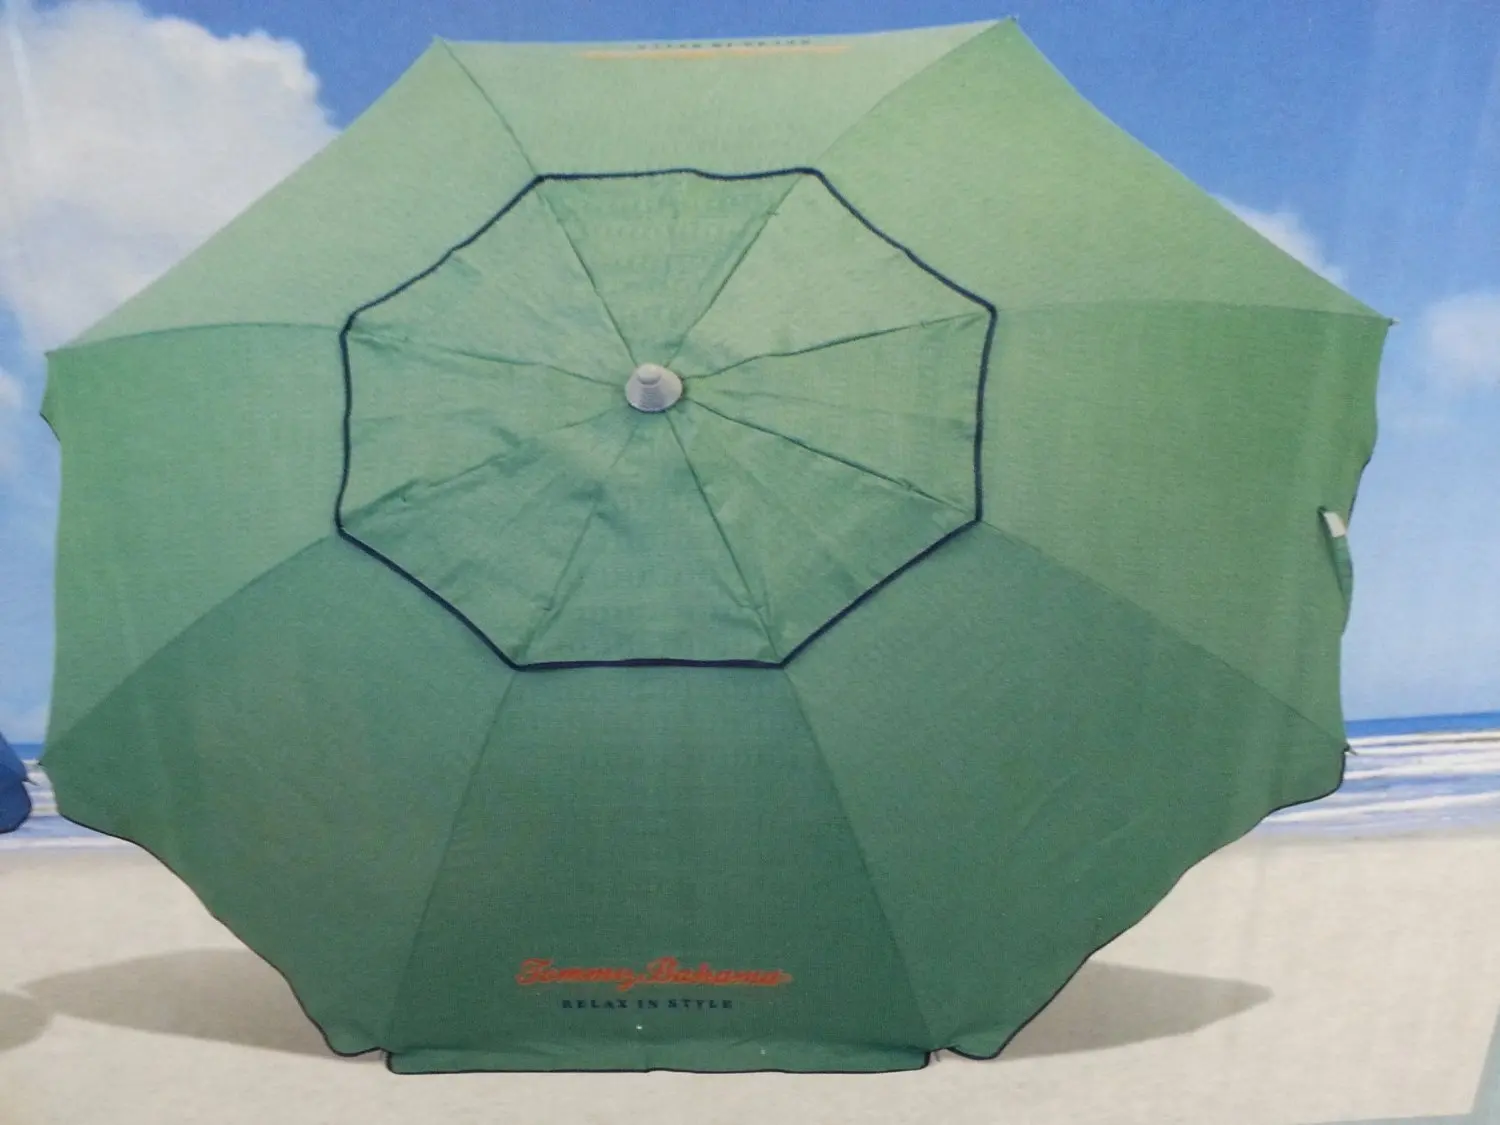 Cheap Tommy Bahama Umbrella, find Tommy Bahama Umbrella deals on line at Alibaba.com